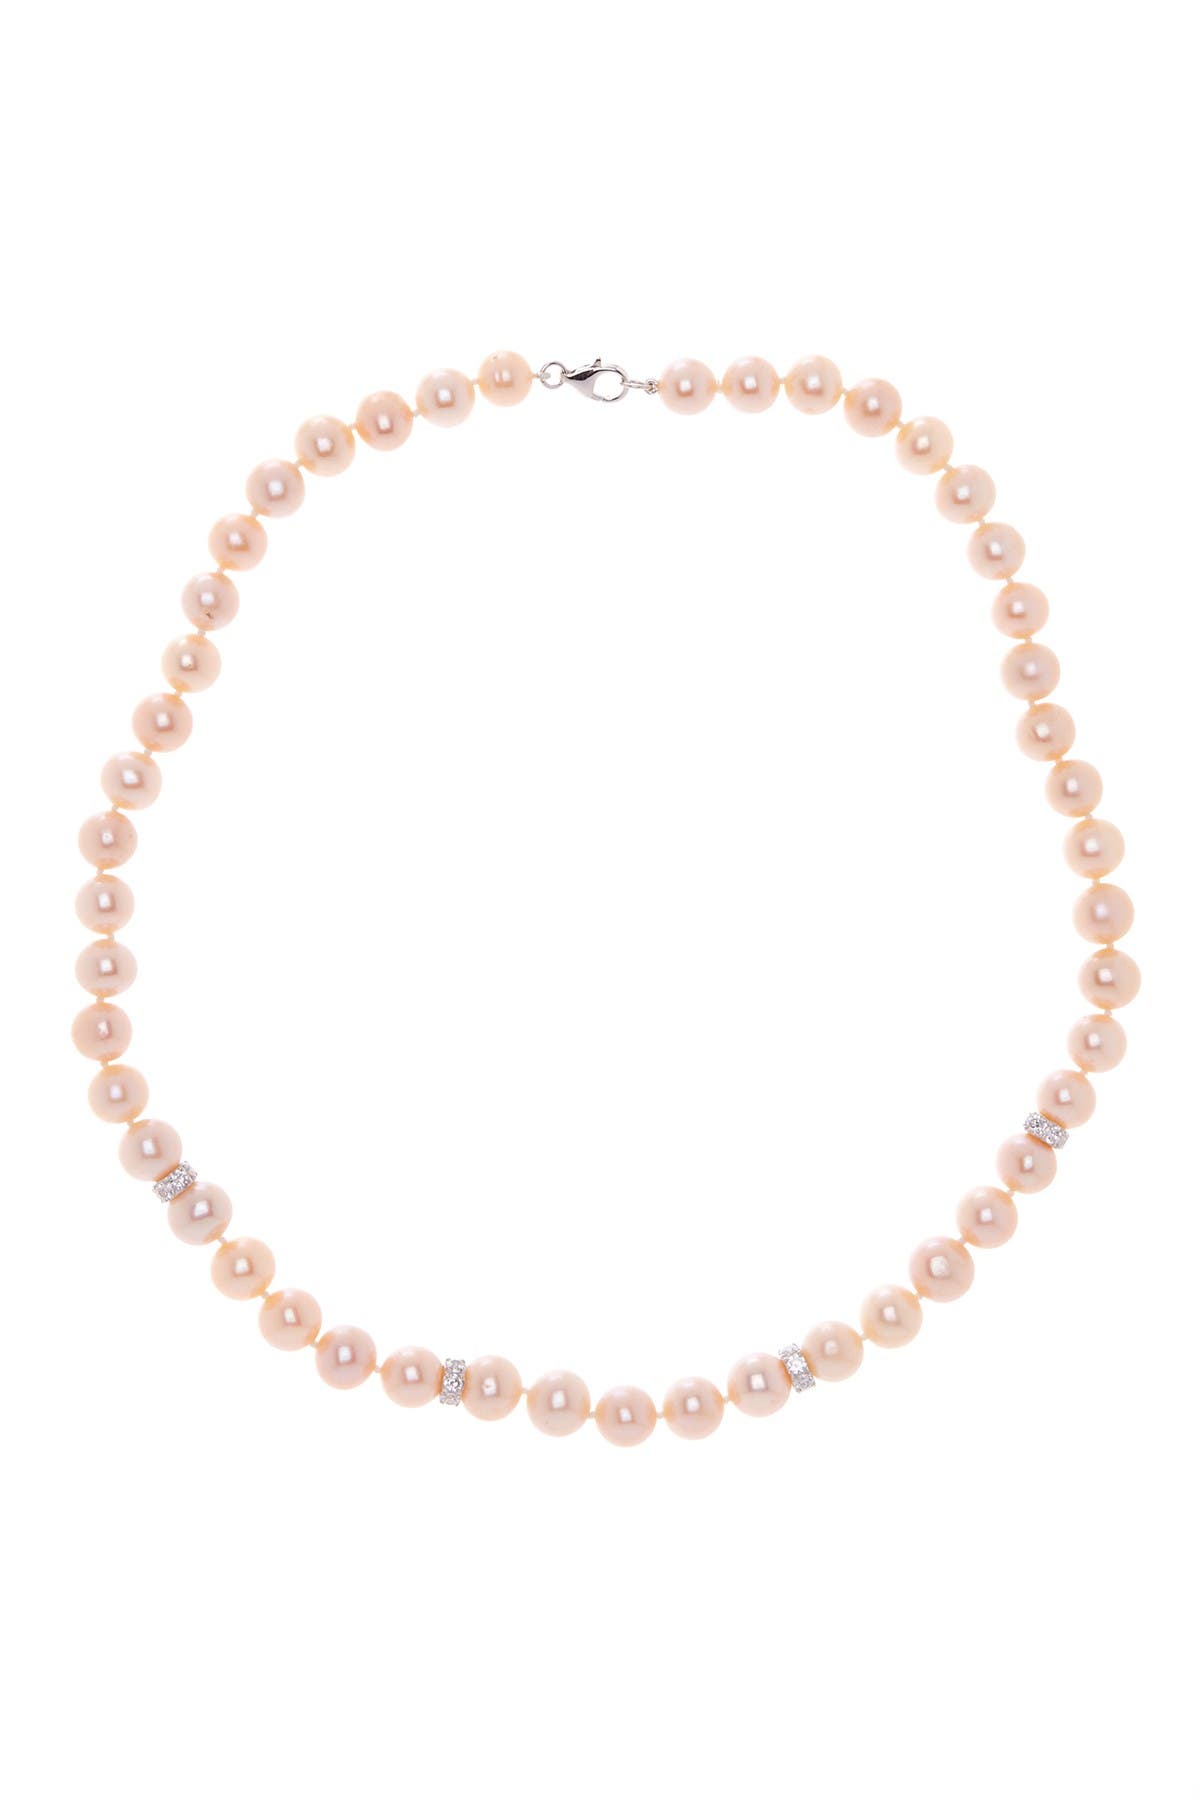 K112405 4 Strands 18" White Rice Pearl Necklace CZ Pendant 